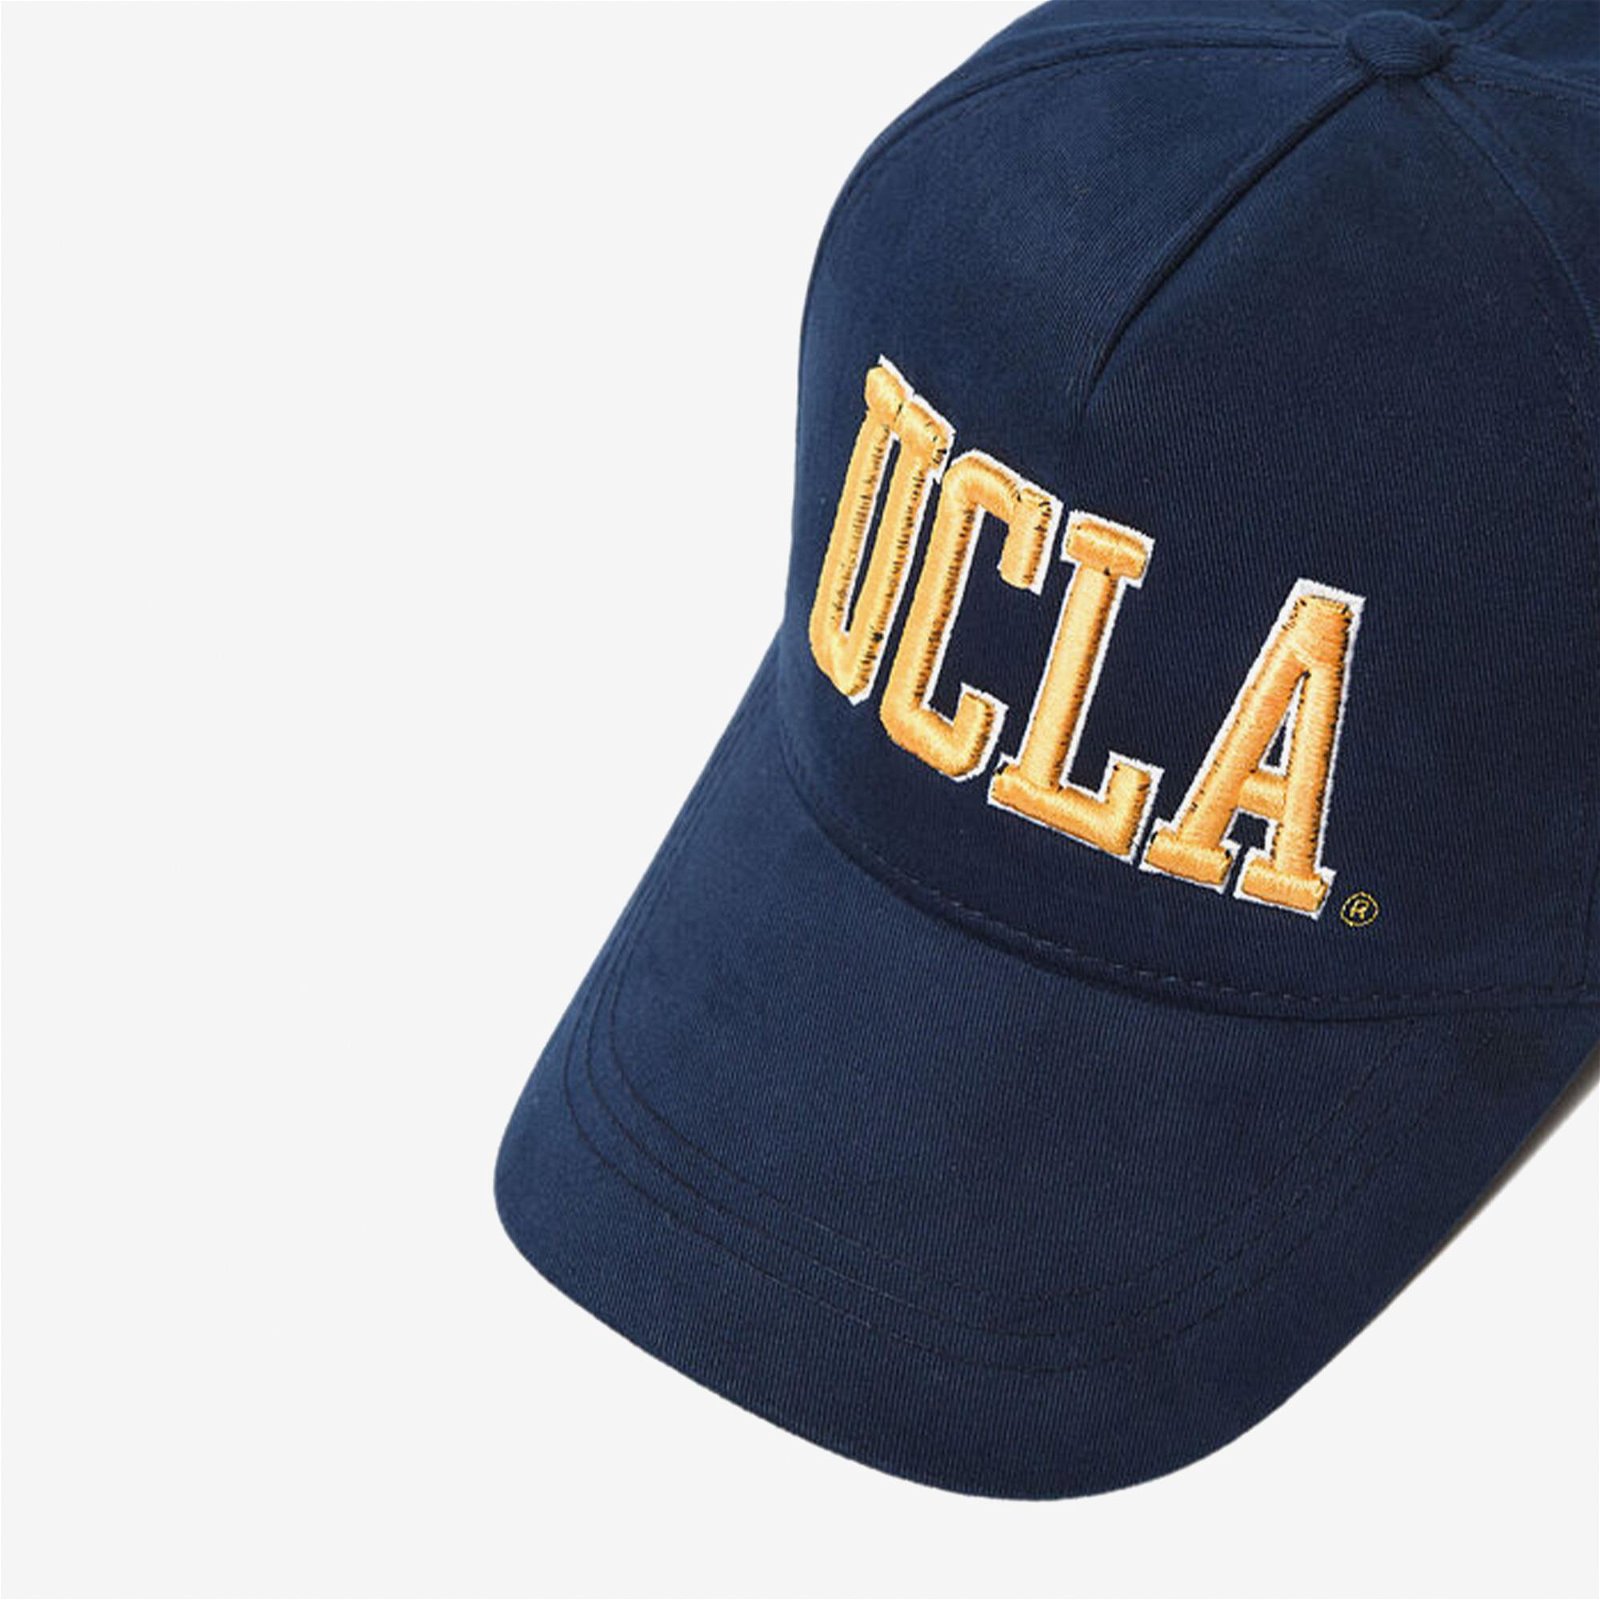 UCLA Ranch Lacivert Şapka